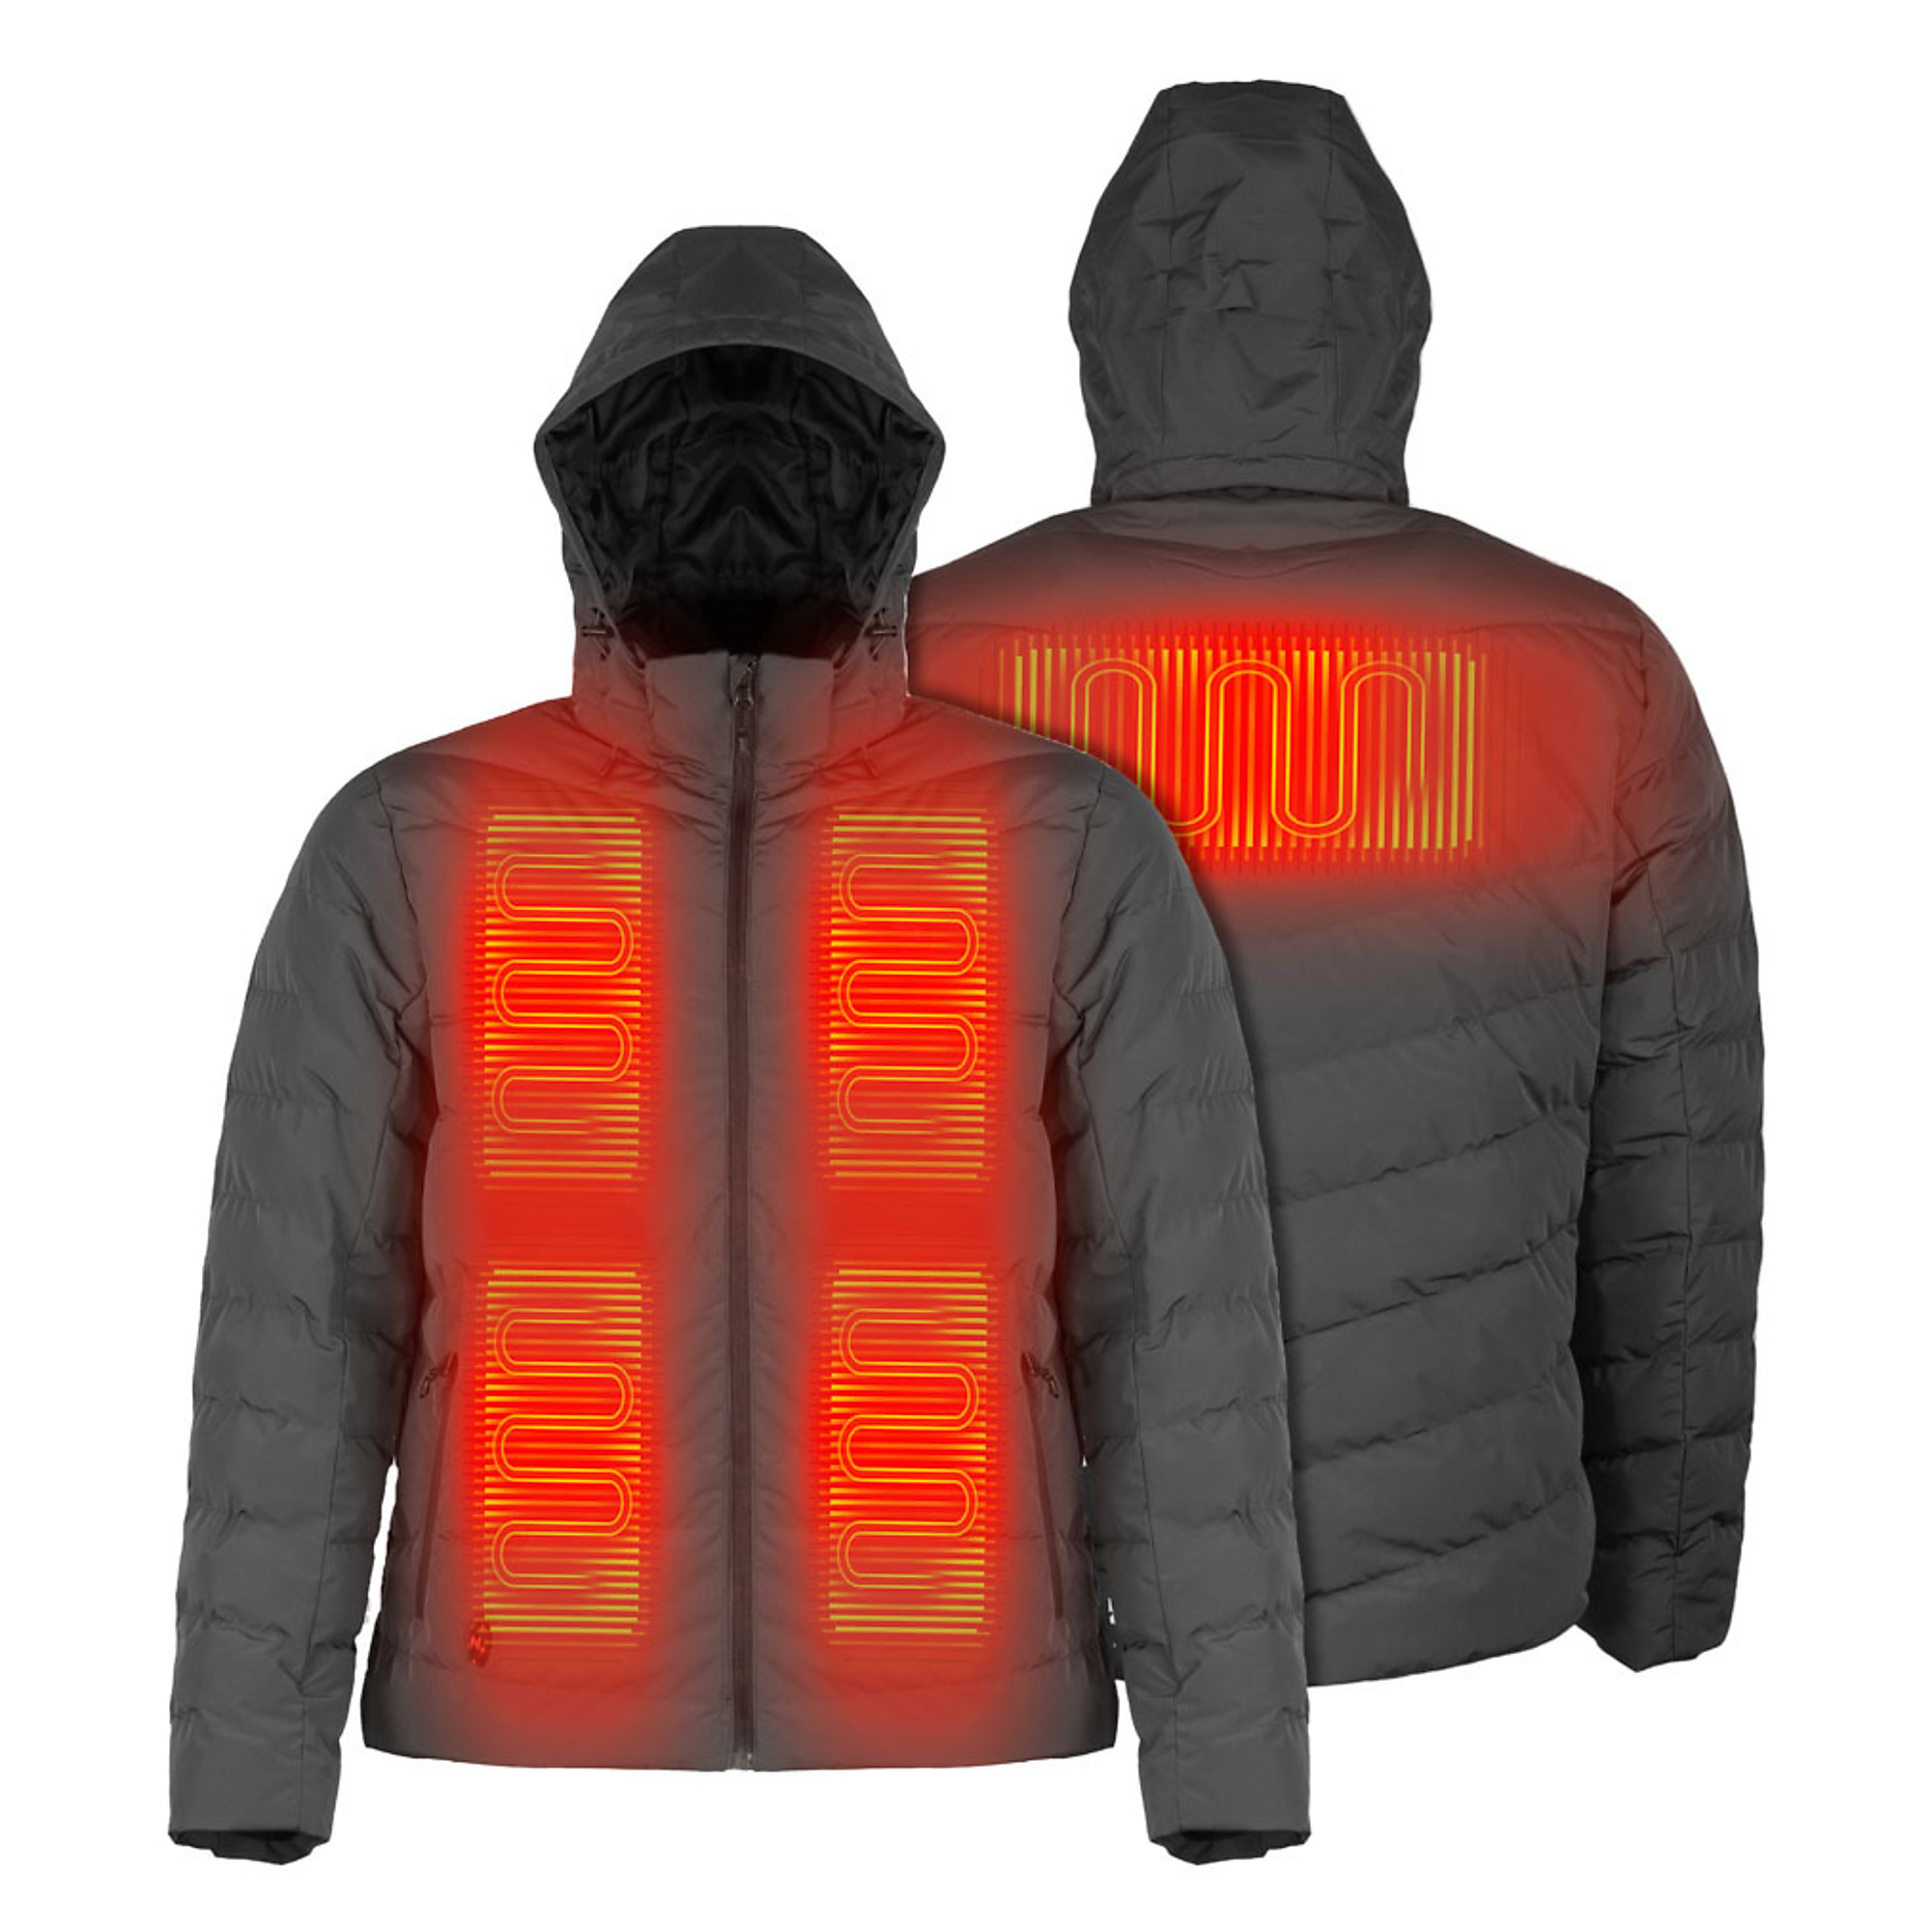 Fieldsheer, Men's Crest Heated Jacket with 7.4v Battery, Size 3XL, Color Black, Model MWMJ37010722